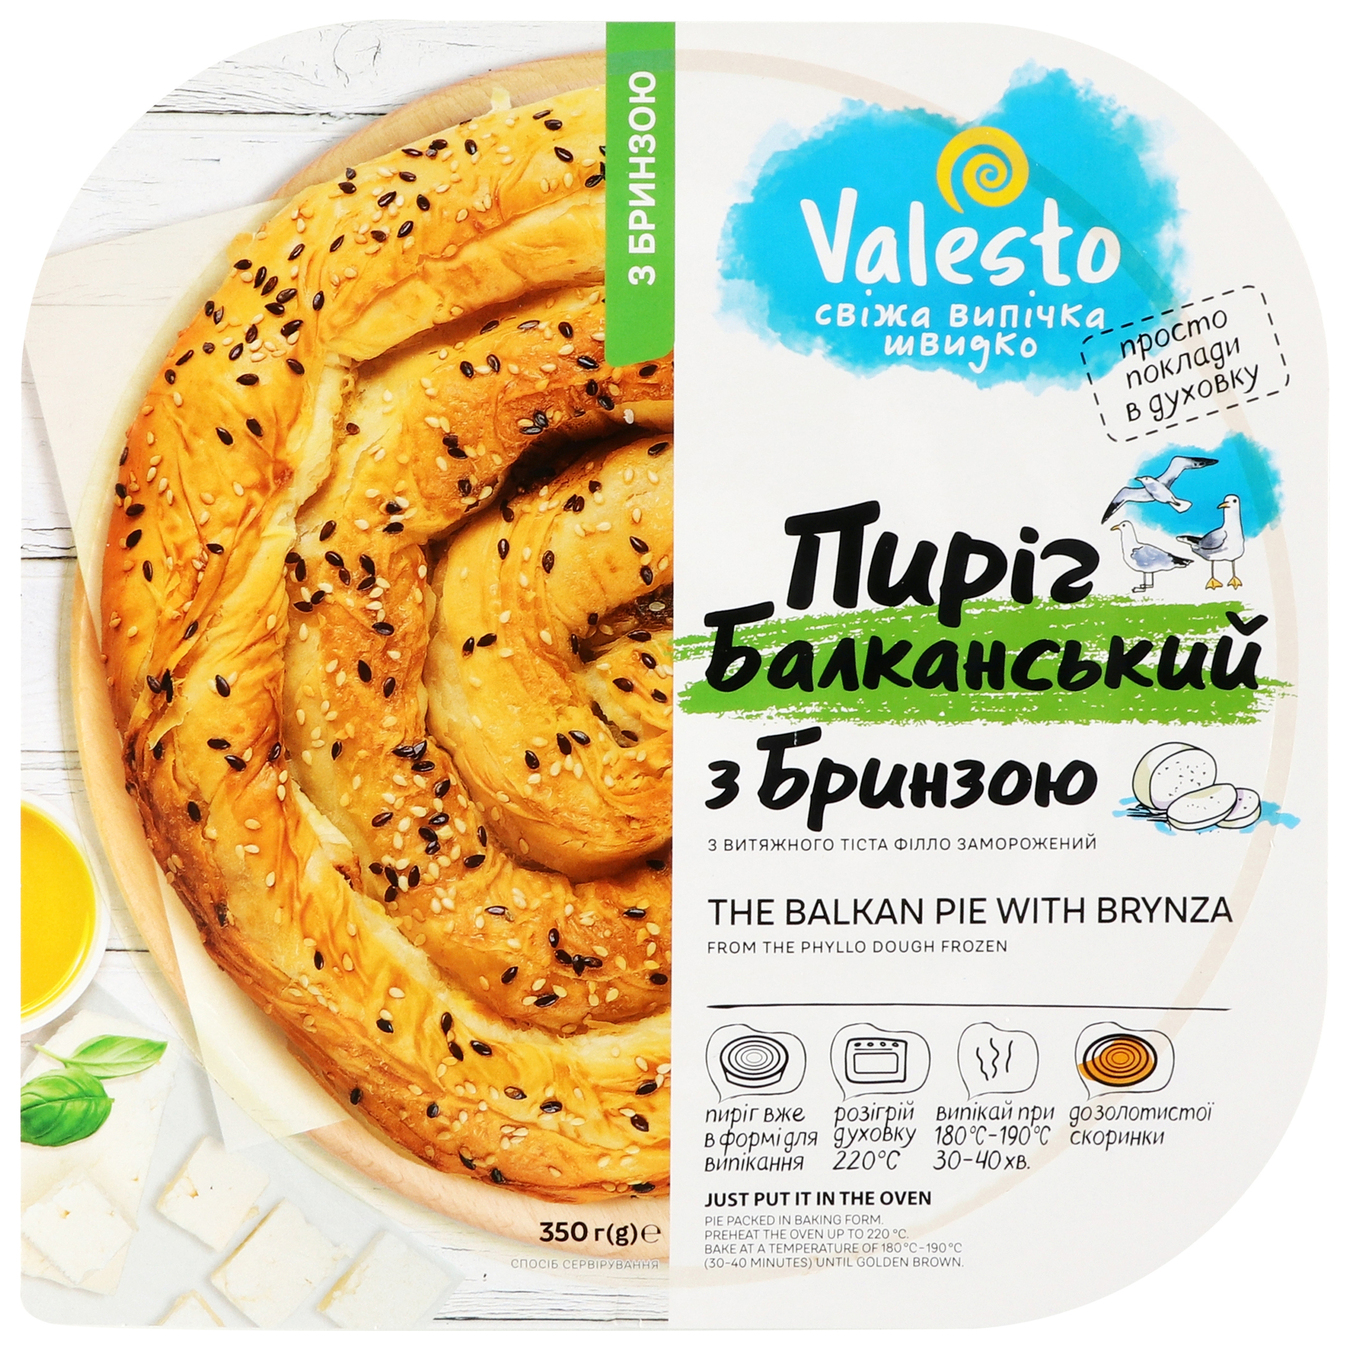 Valesto Balkan pie with cheese frozen 350g